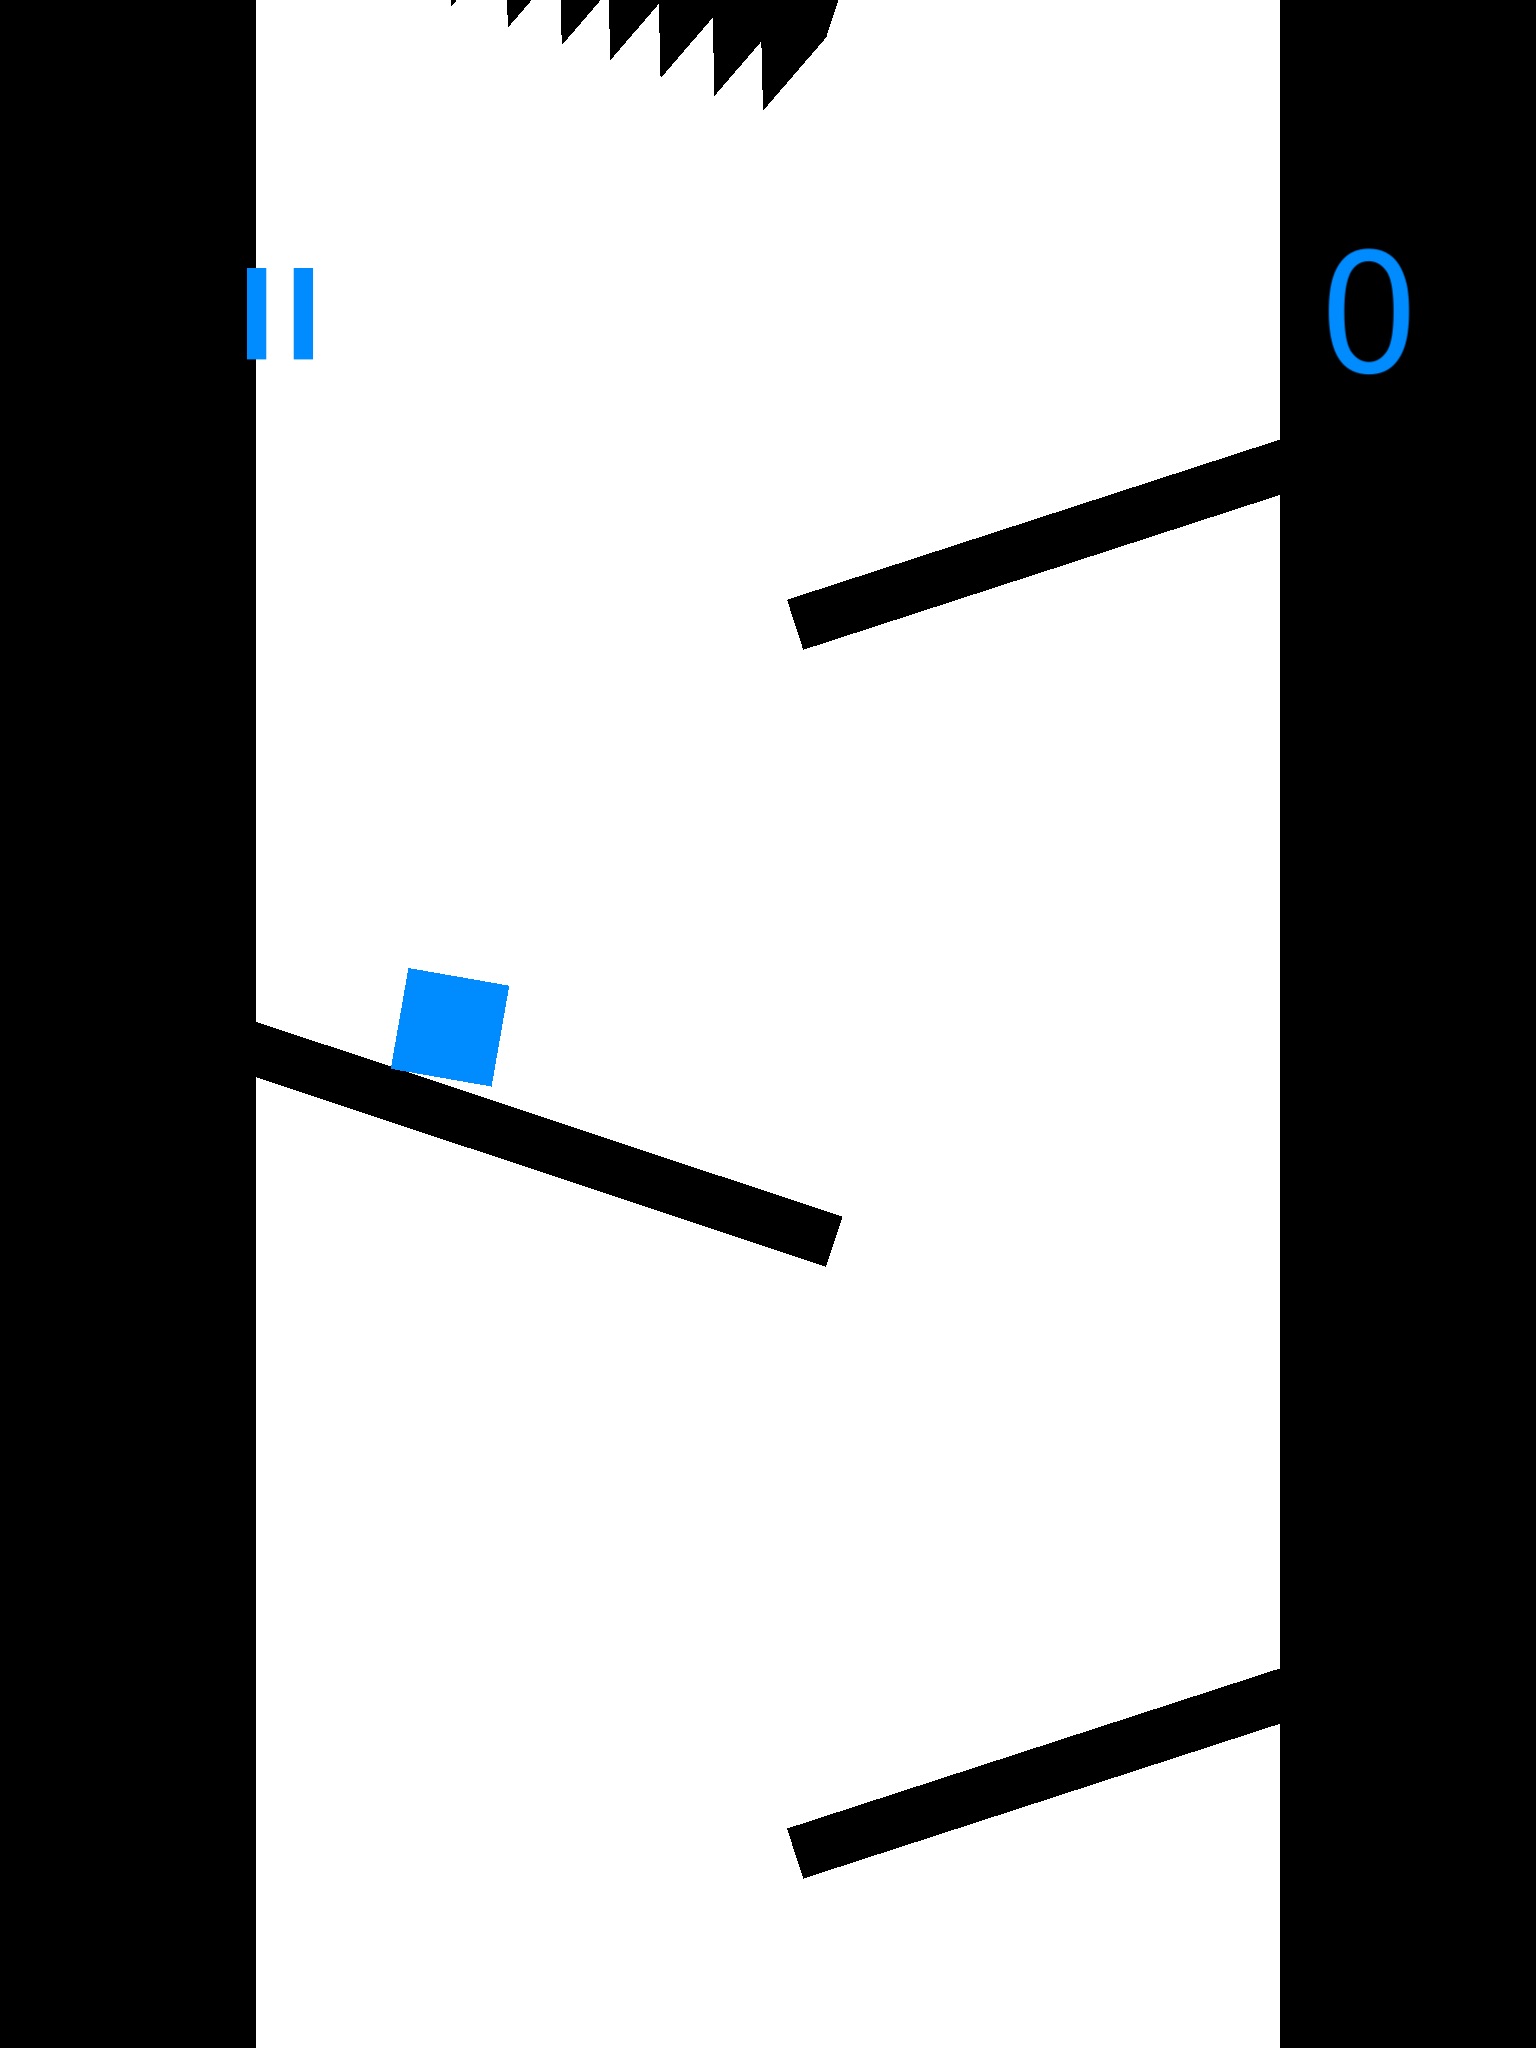 Wall Climber - Jump to the Top screenshot 2